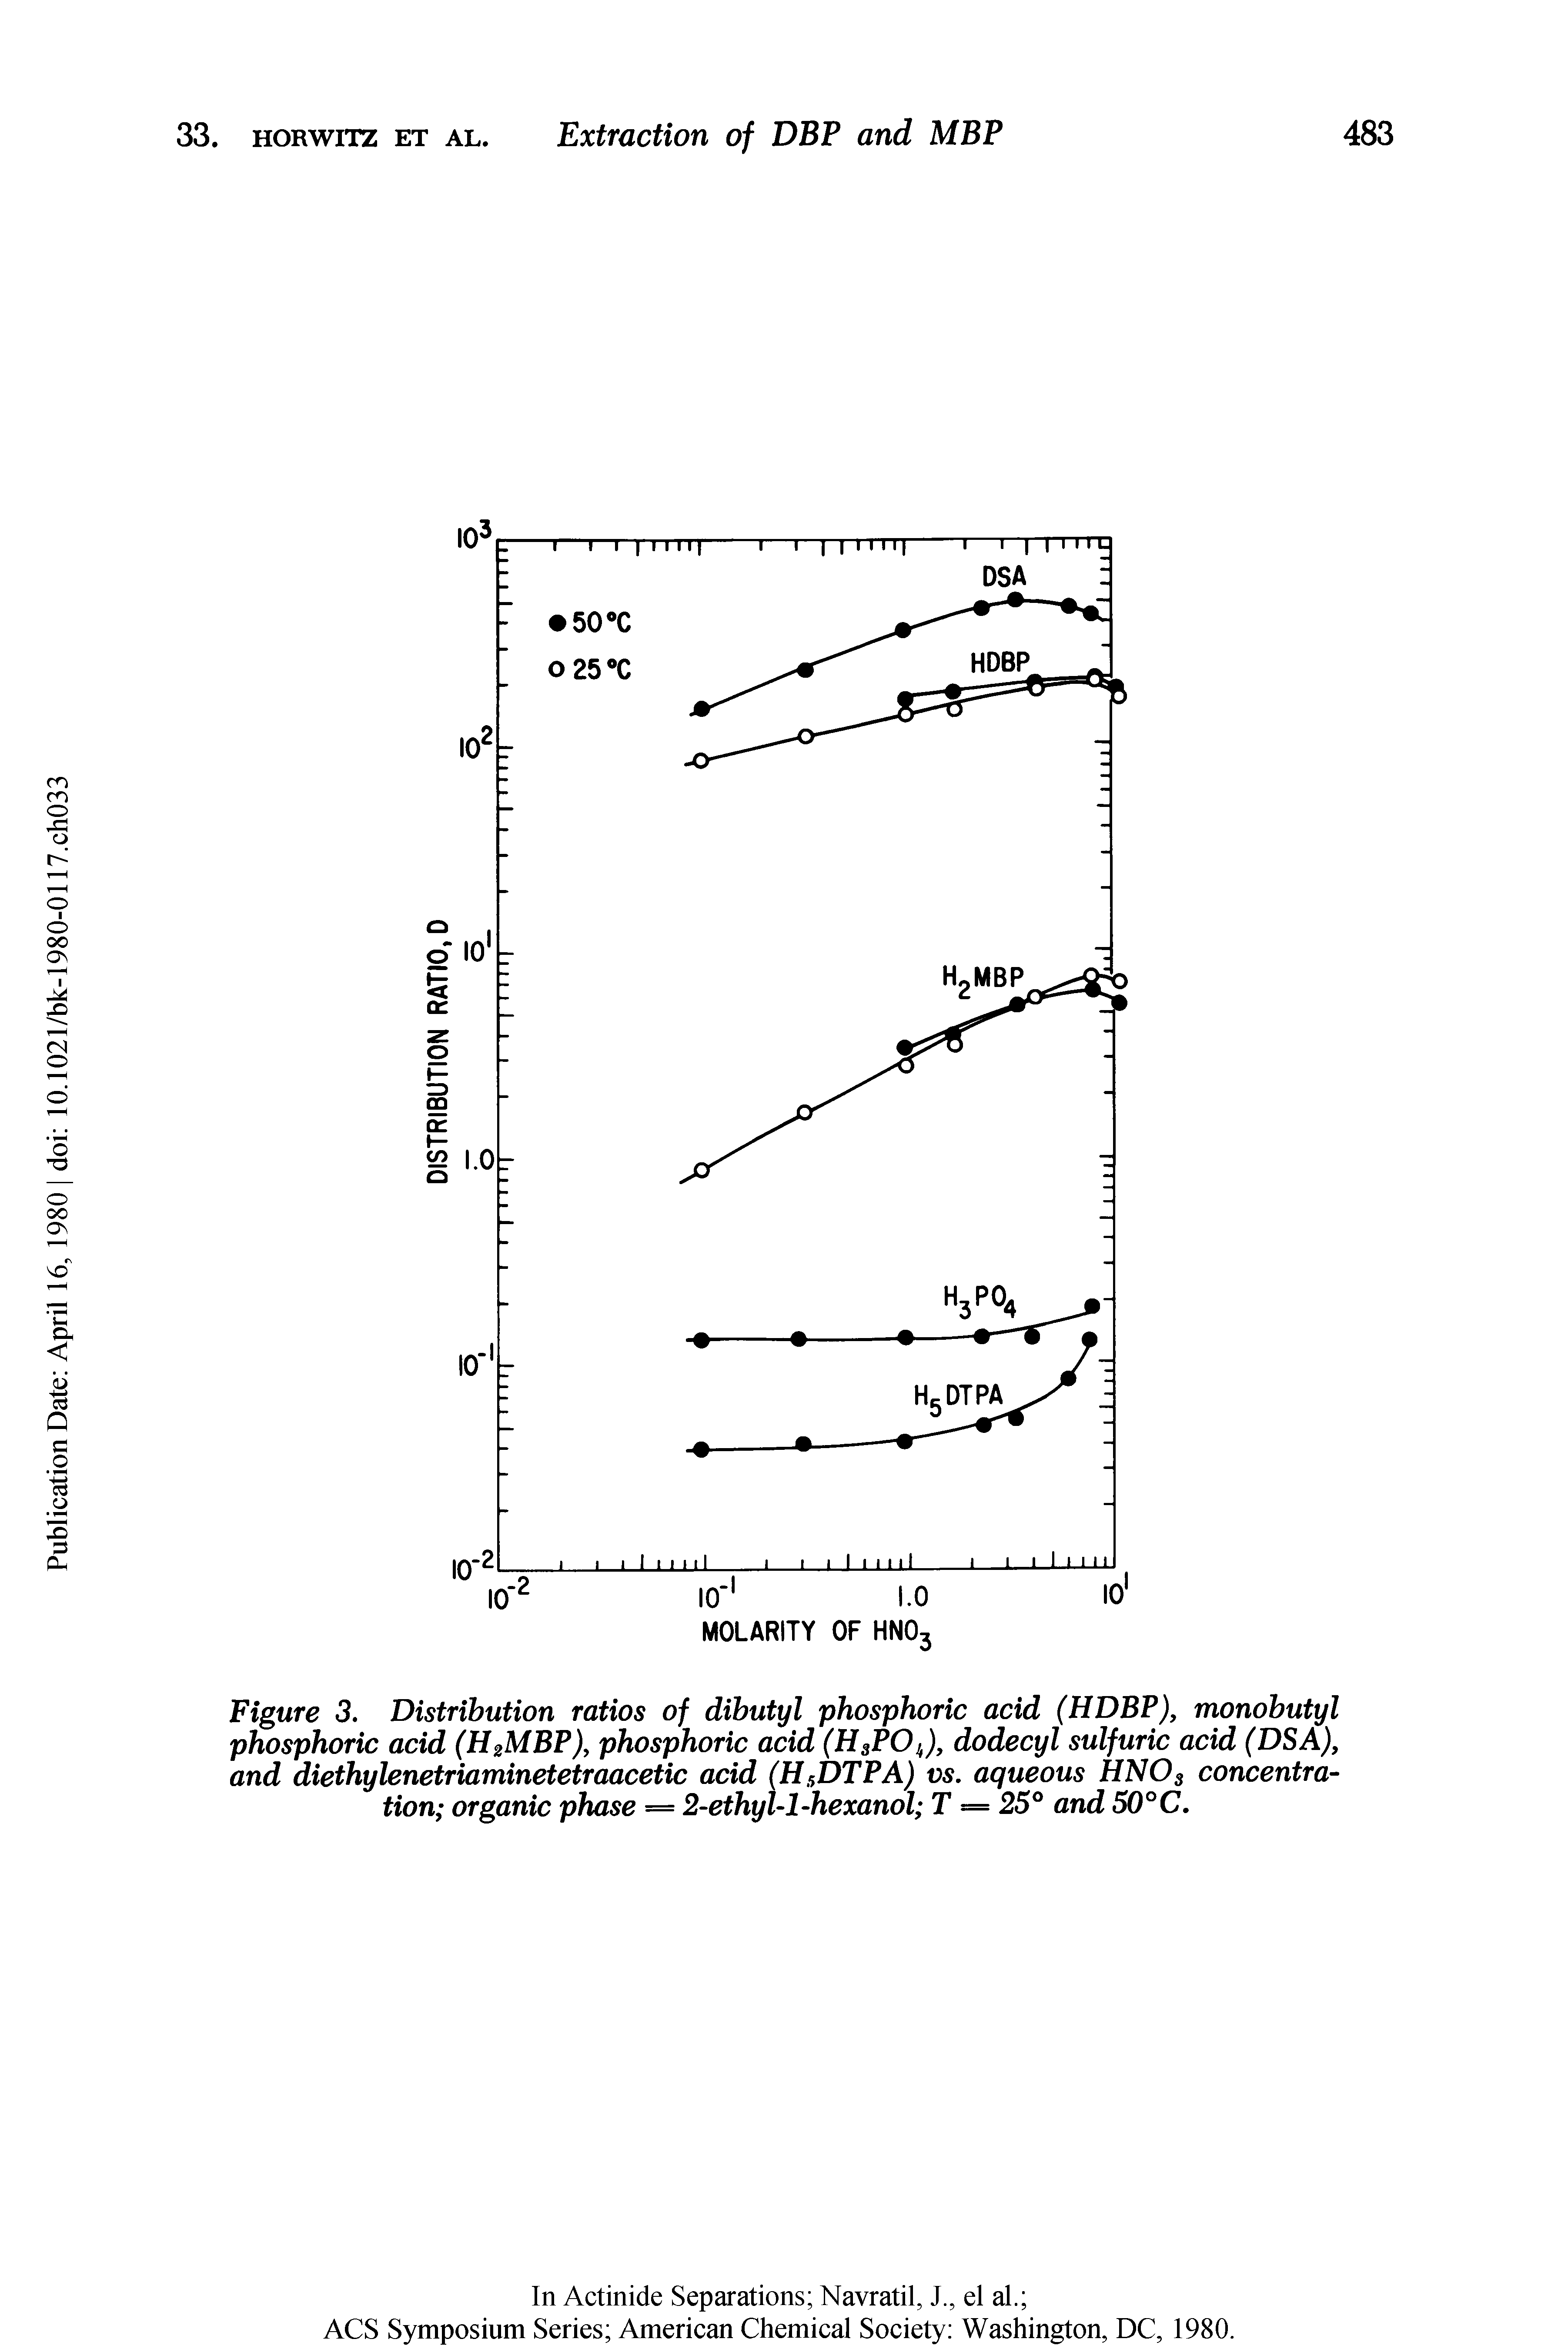 Figure 3. Distribution ratios of dibutyl phosphoric acid (HDBP), monobutyl phosphoric acid (H2MBP), phosphoric acid (HsPOk), dodecyl sulfuric acid (DSA), and diethylenetriaminetetraacetic acid (H5DTPA) vs. aqueous HN03 concentration organic phase = 2-ethyl-l-hexanol T = 25° and 50°C.